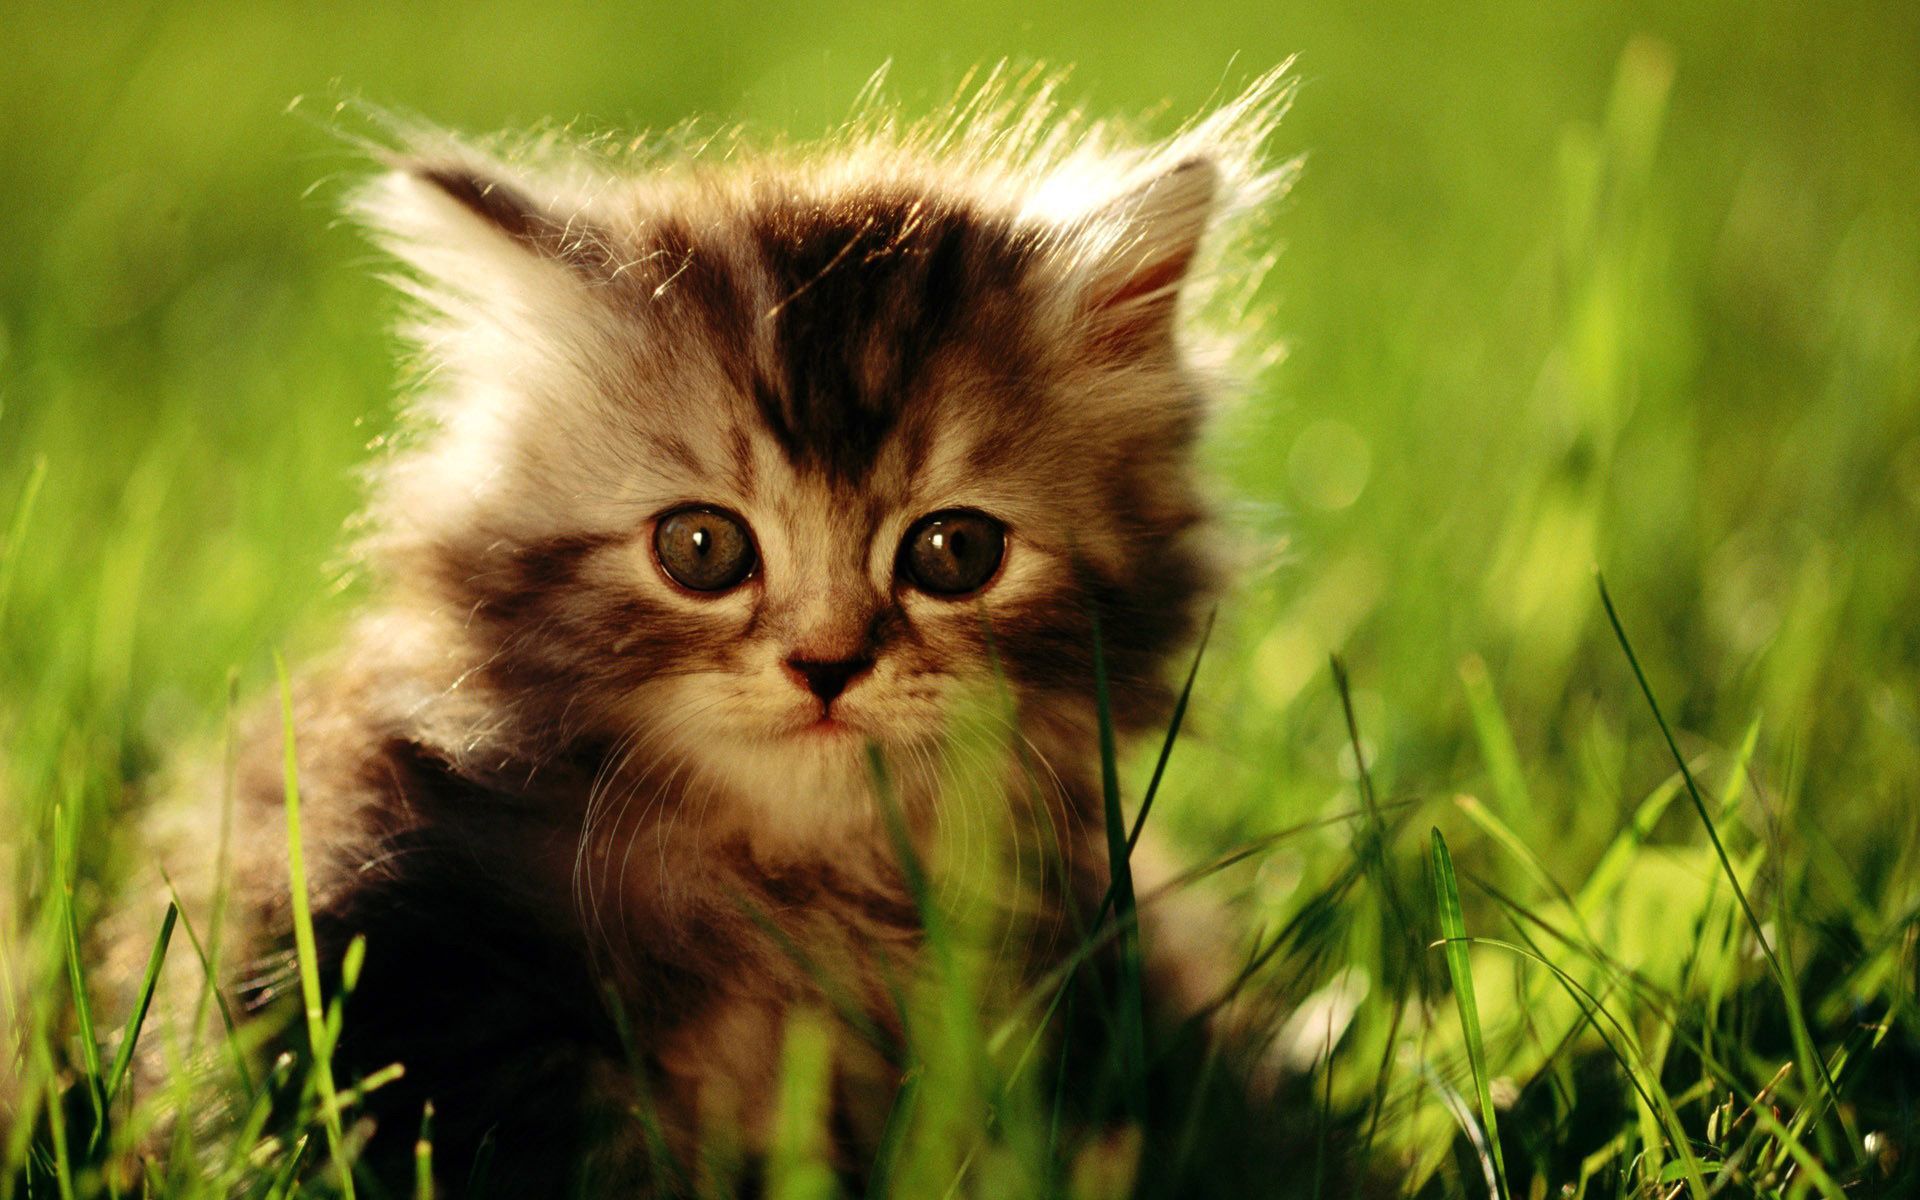 Descarga gratuita de fondo de pantalla para móvil de Gatos, Animales.